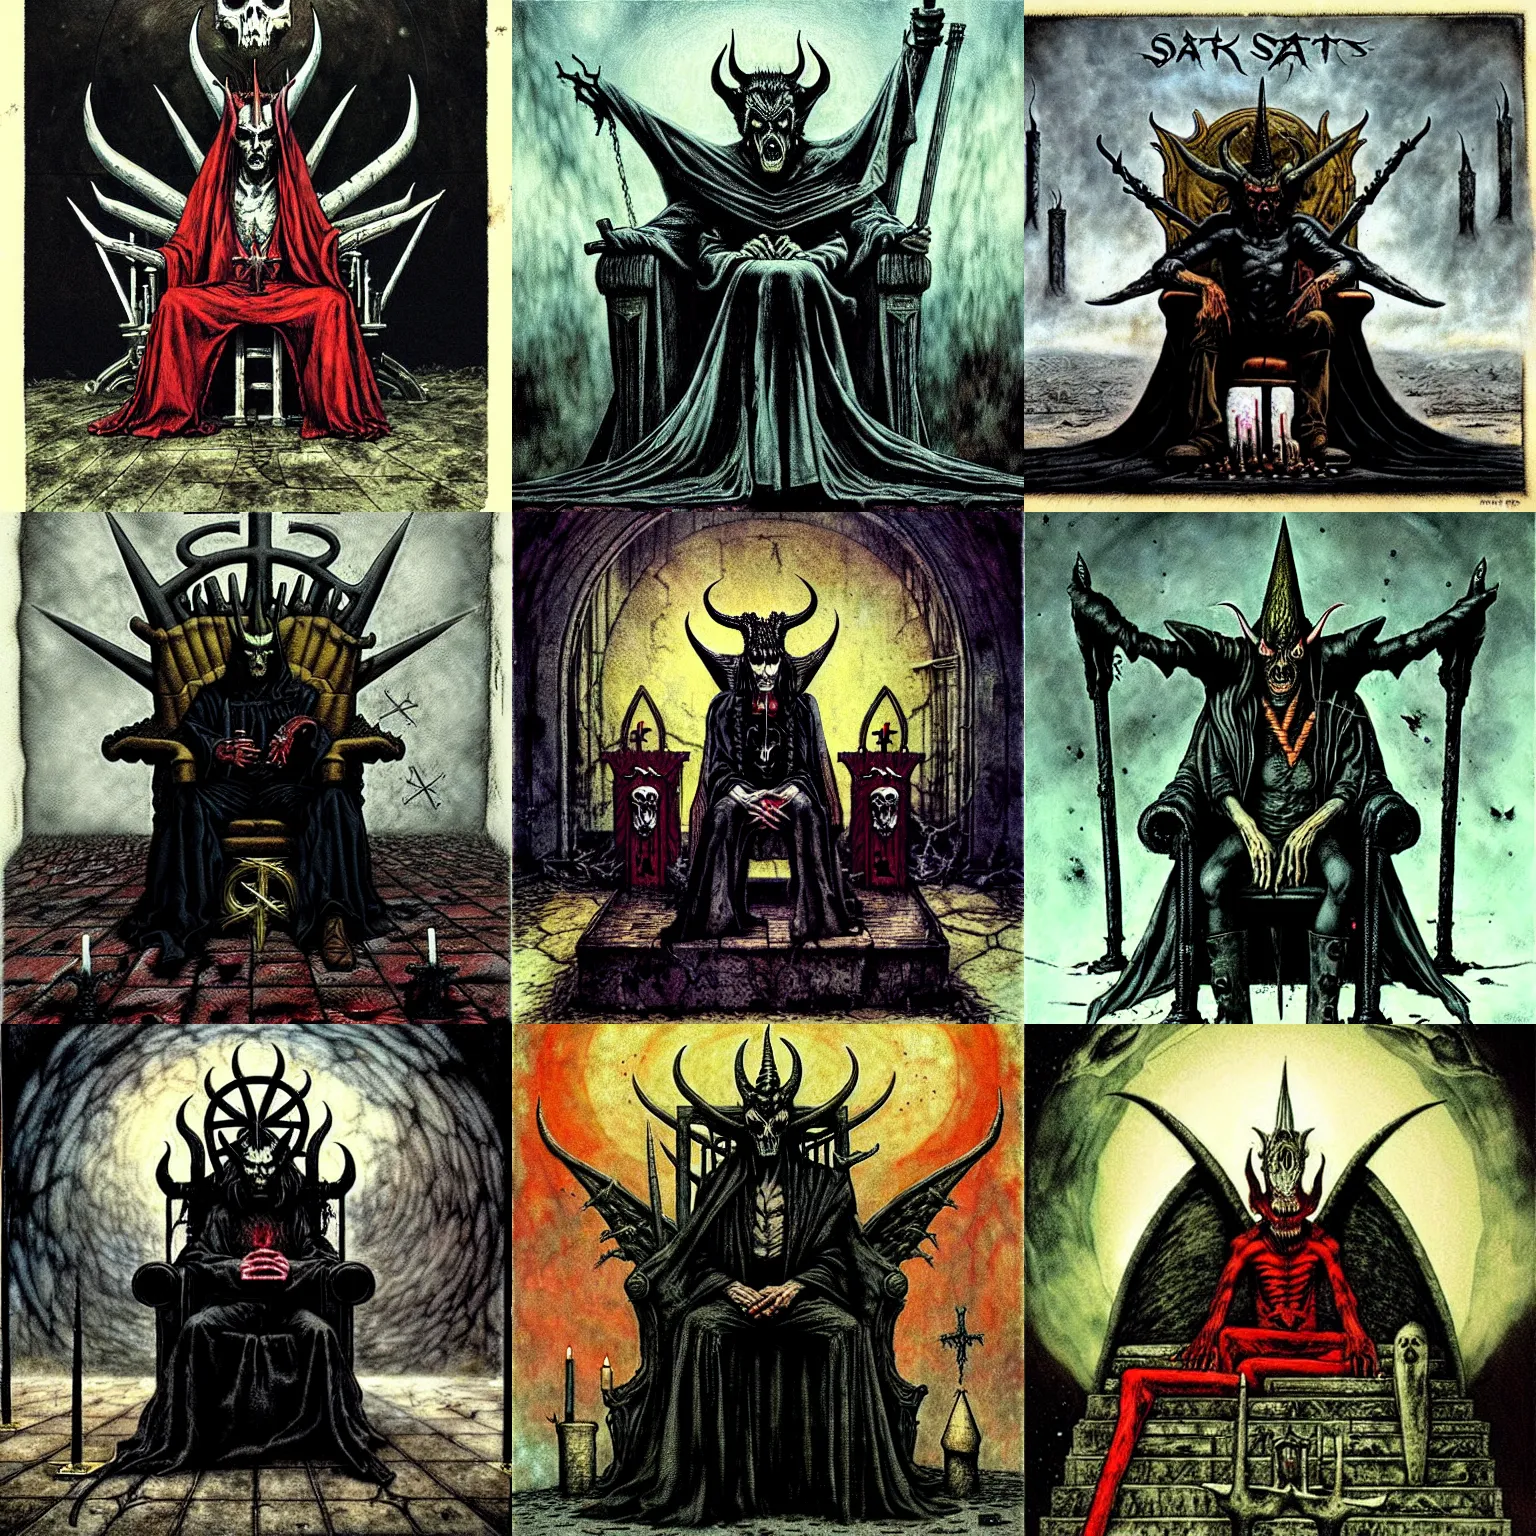 Prompt: dark ambient album cover, satan sitting on a throne, asymetrical design, magic, apocalypse, occult, magic, enki bilal